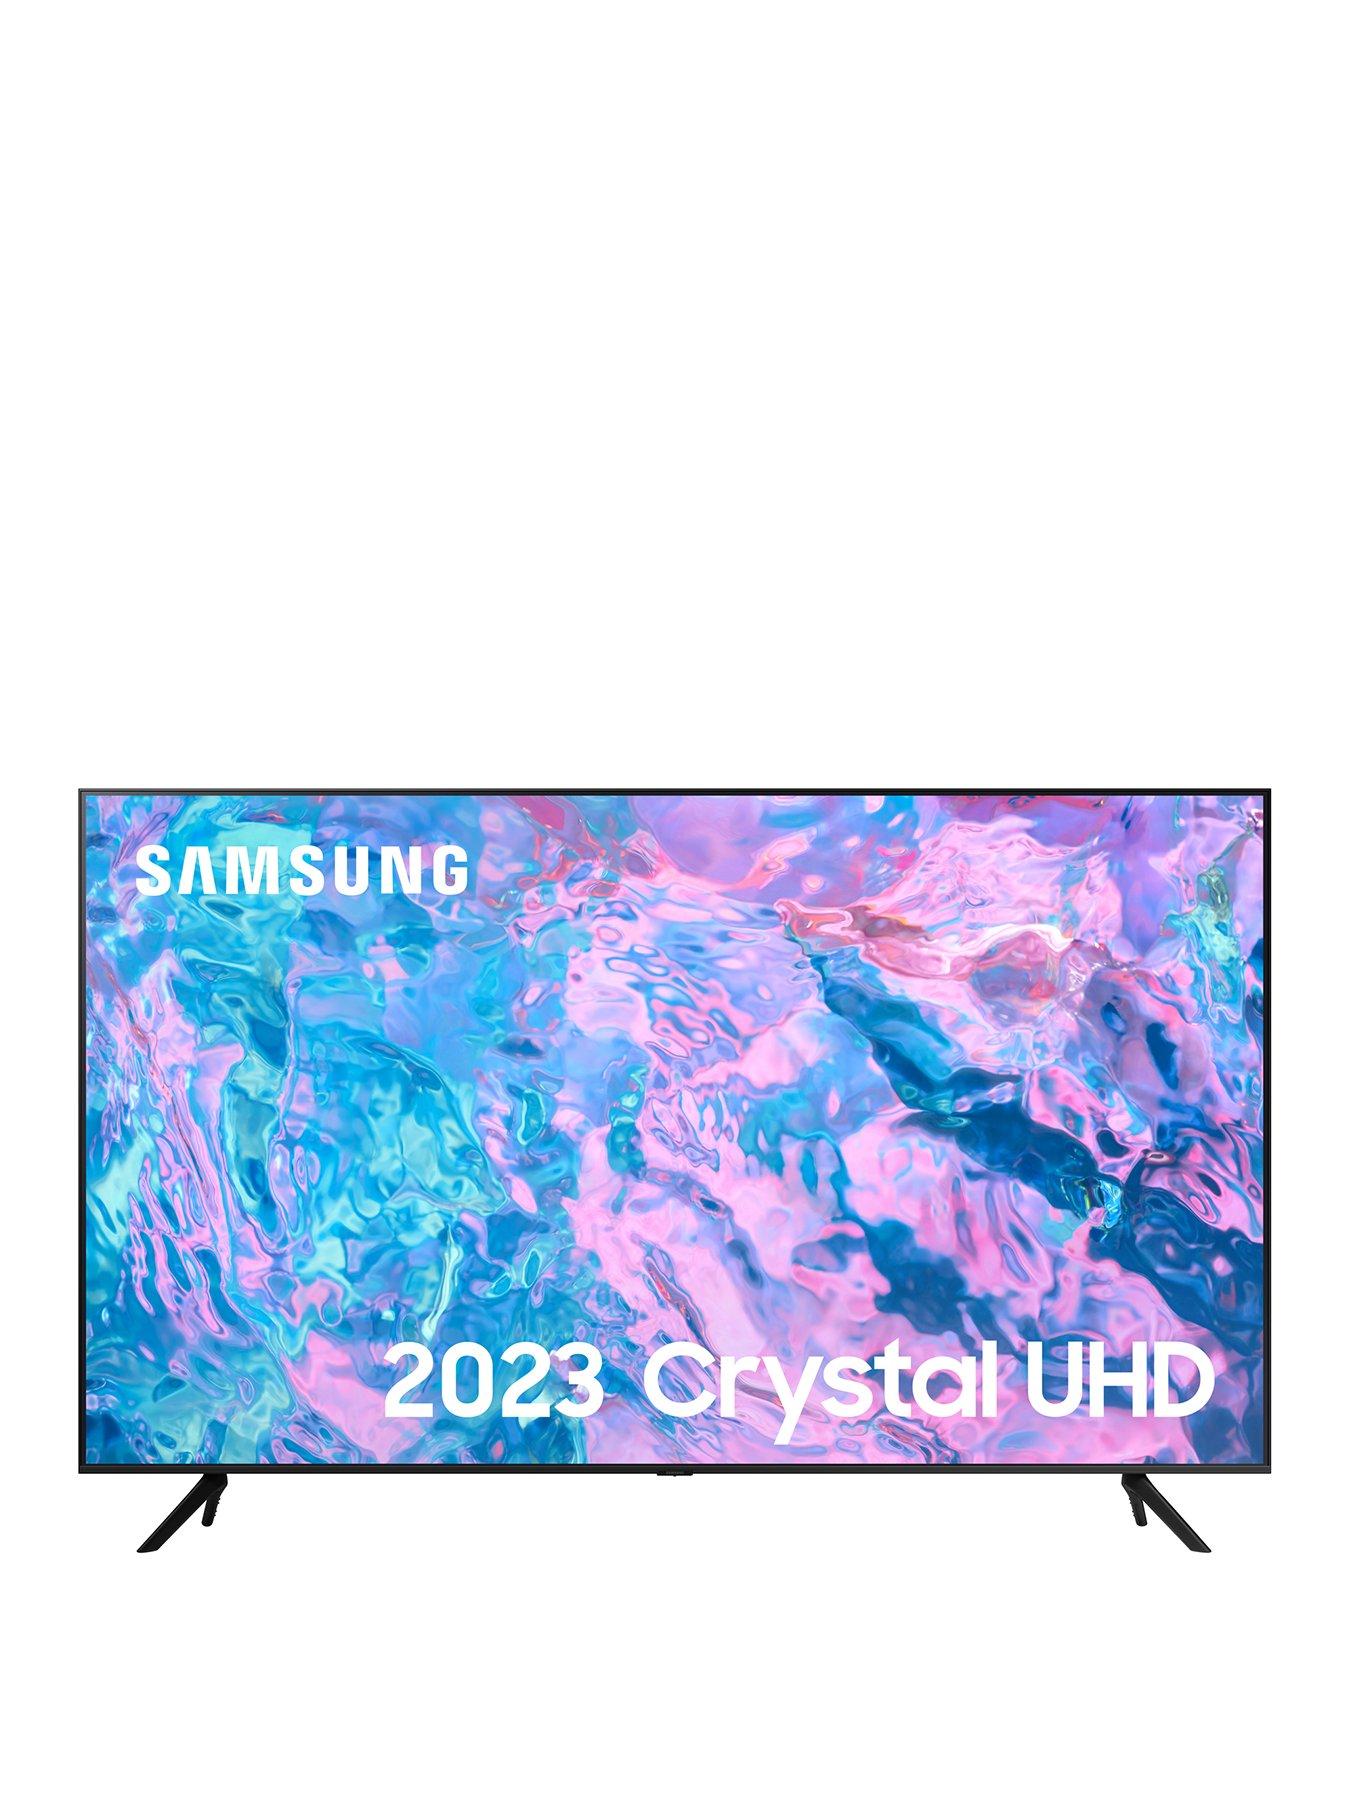 81 cm (32-inch) TVs - 94 cm (37-inch) TVs, LED Smart TVs